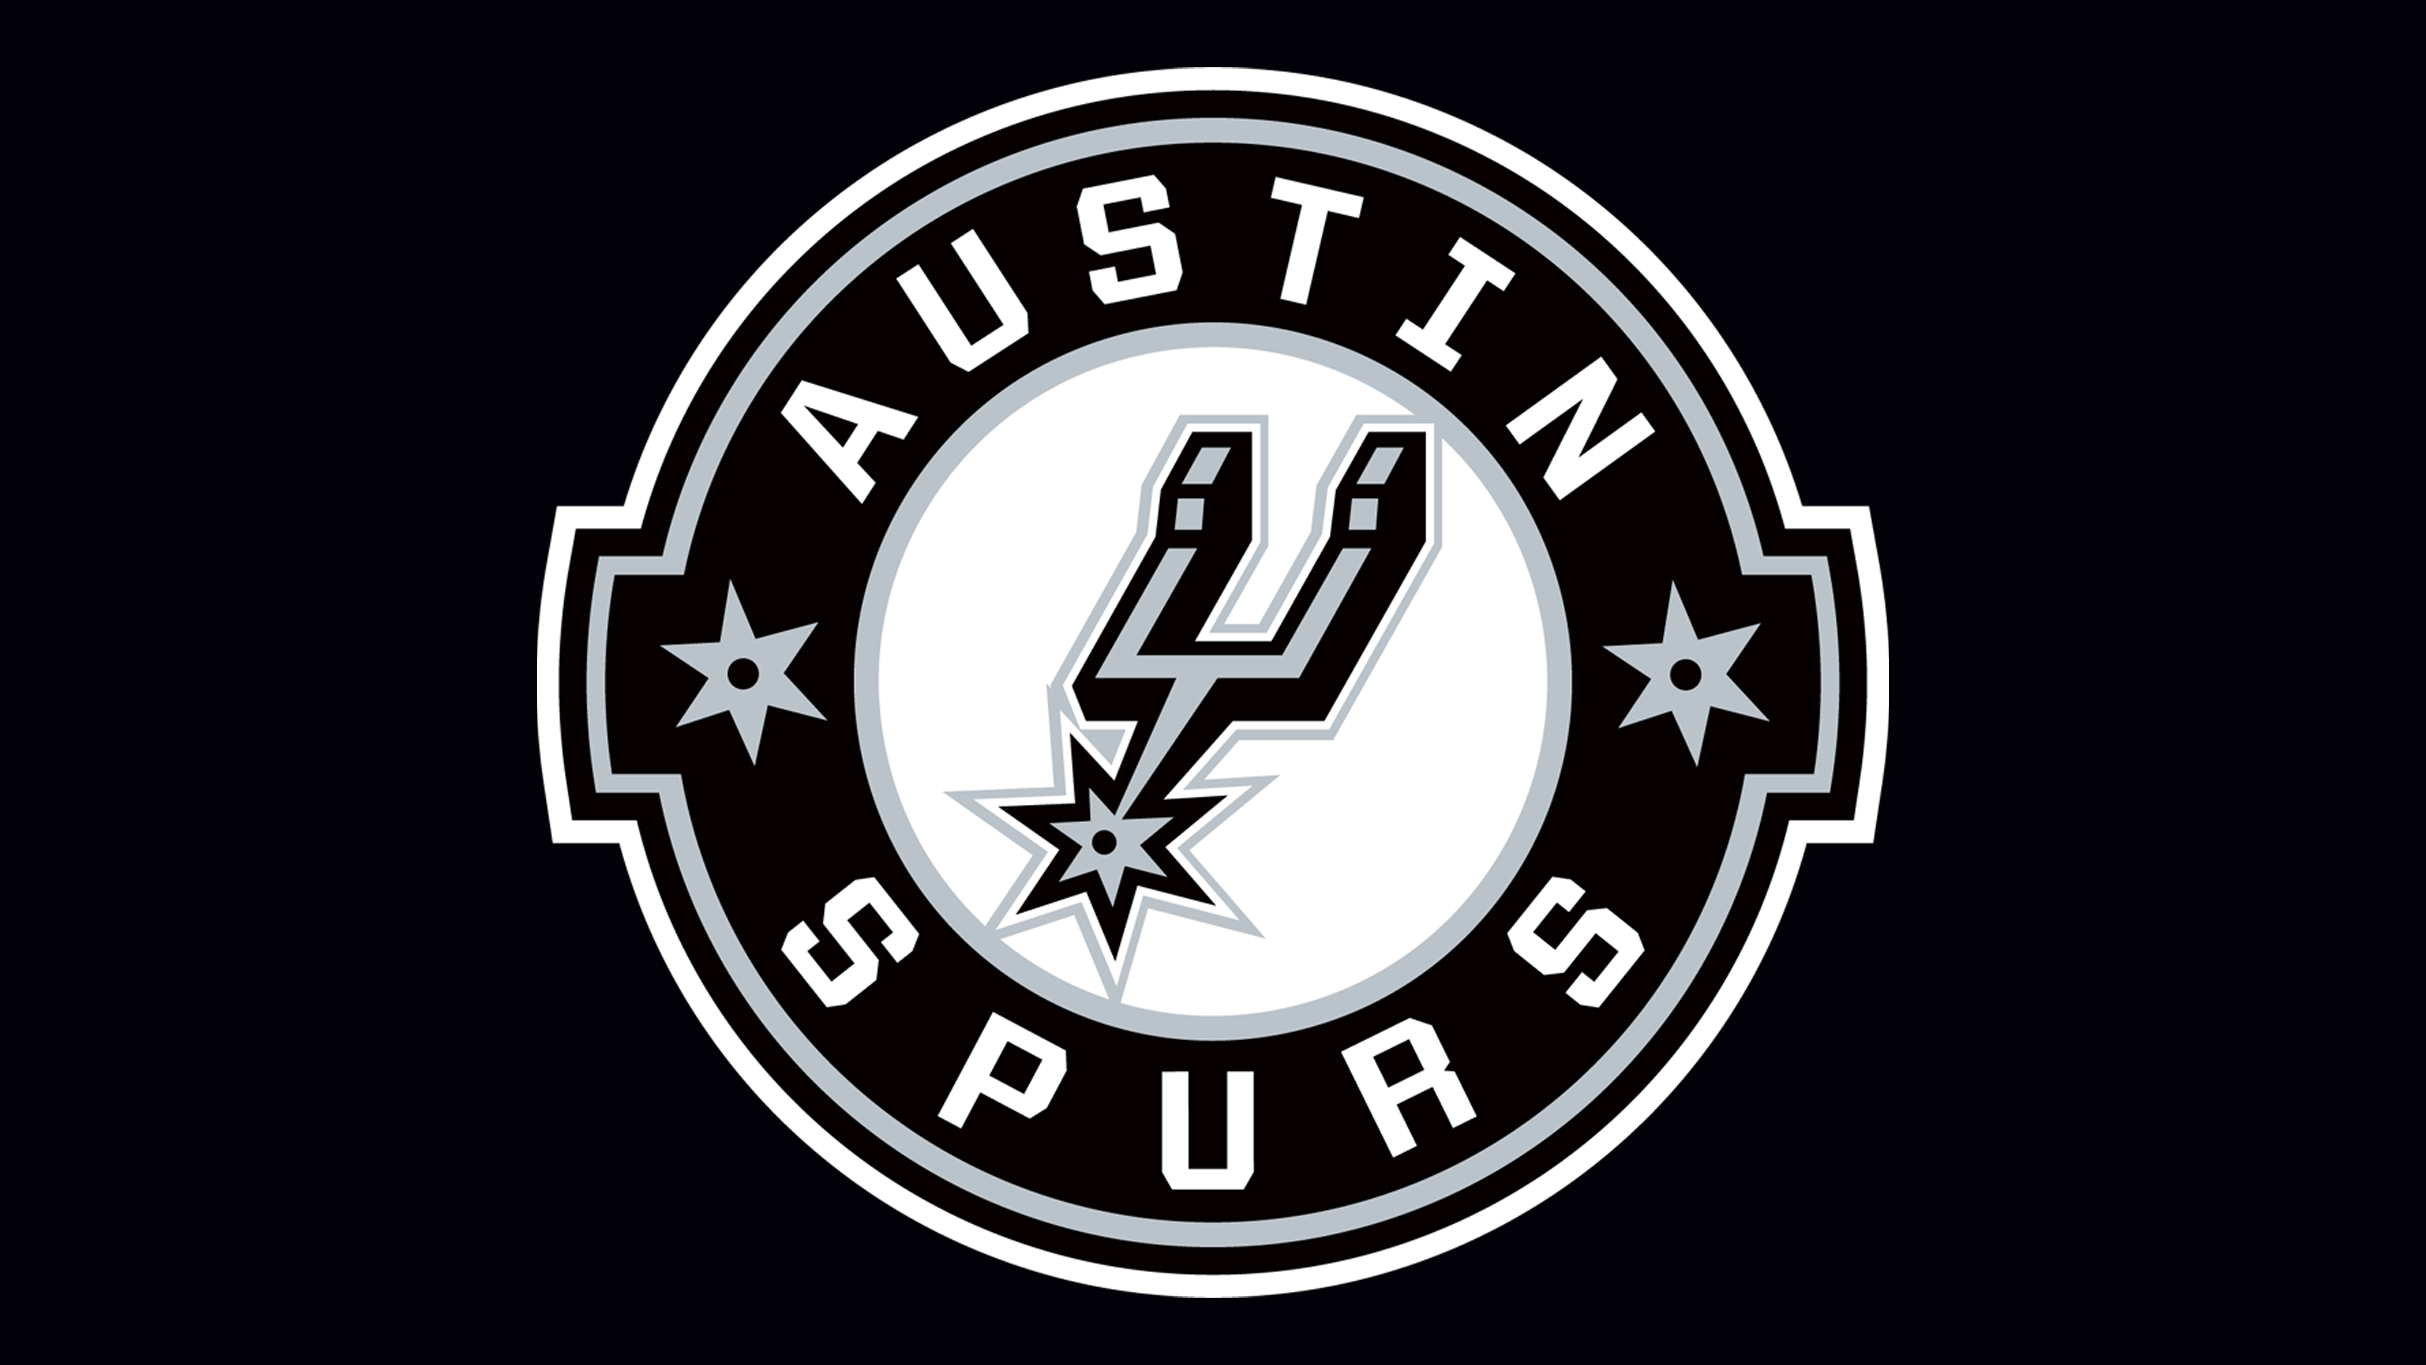 Austin Spurs vs Memphis Hustle in Cedar Park promo photo for Social Media presale offer code